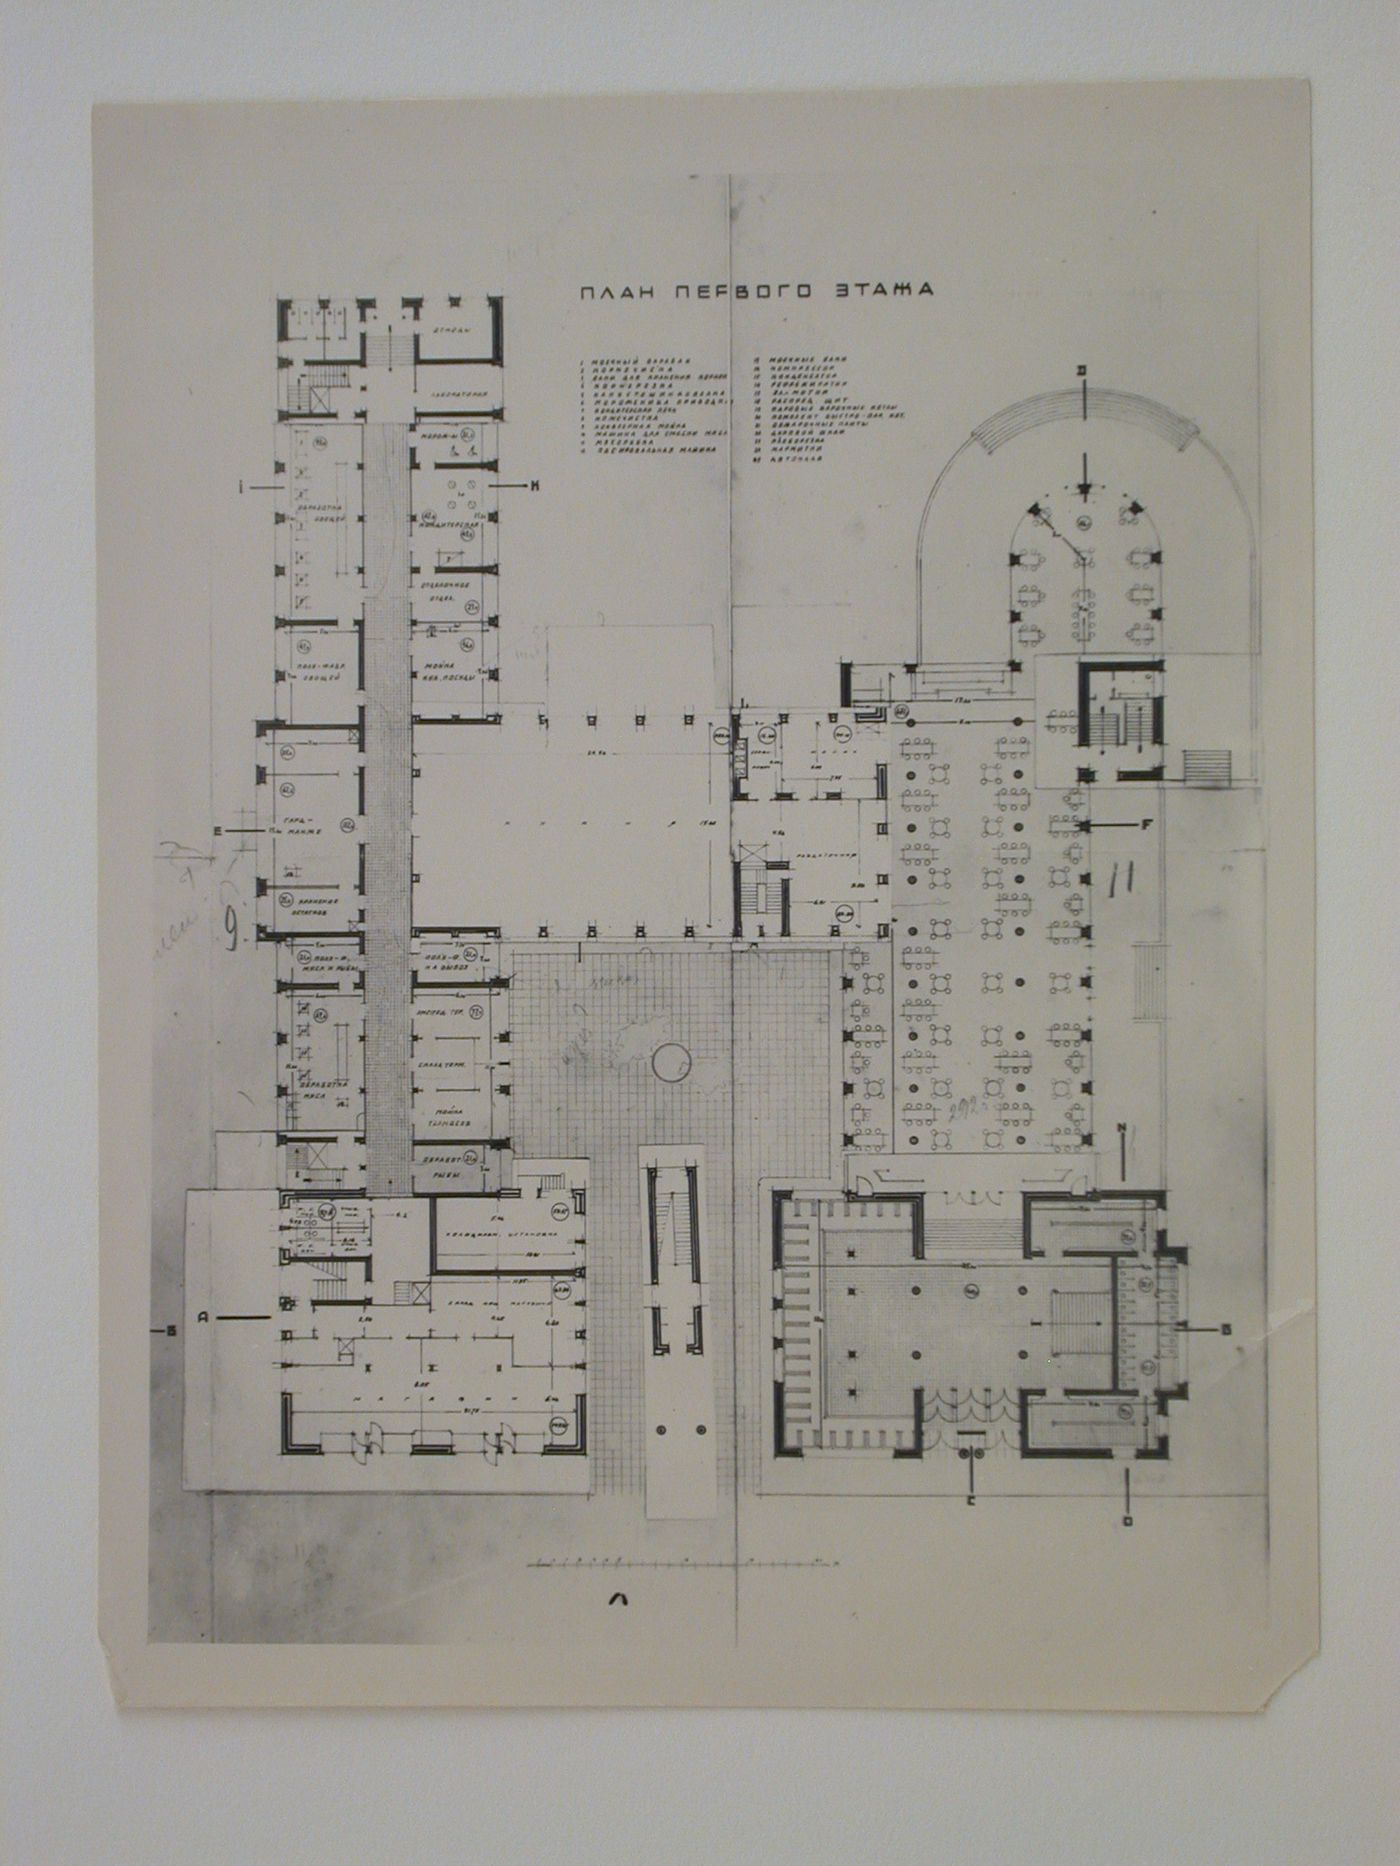 Photograph of a first floor plan for Vyborgskaya Mechanized Canteen, Leningrad (now Saint Petersburg)